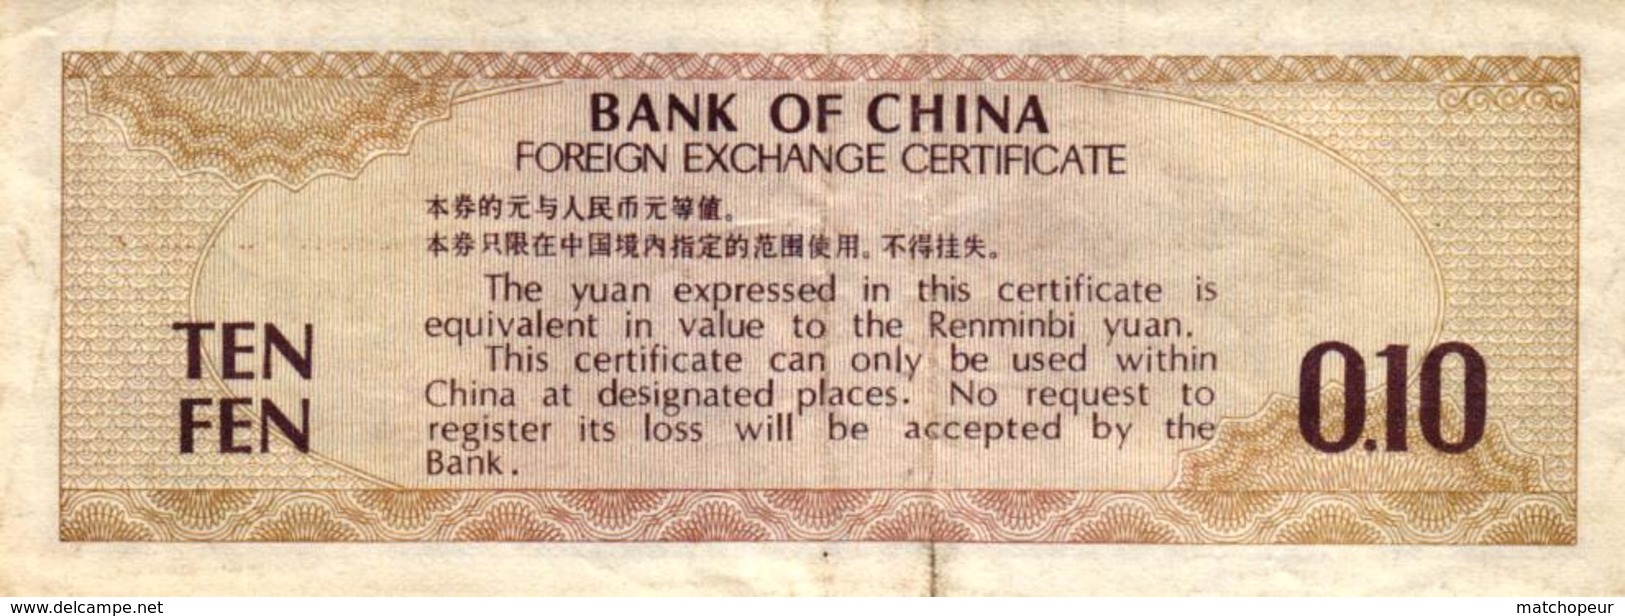 BILLET DE TEN FEN 0.10 BANK OF CHINA - China